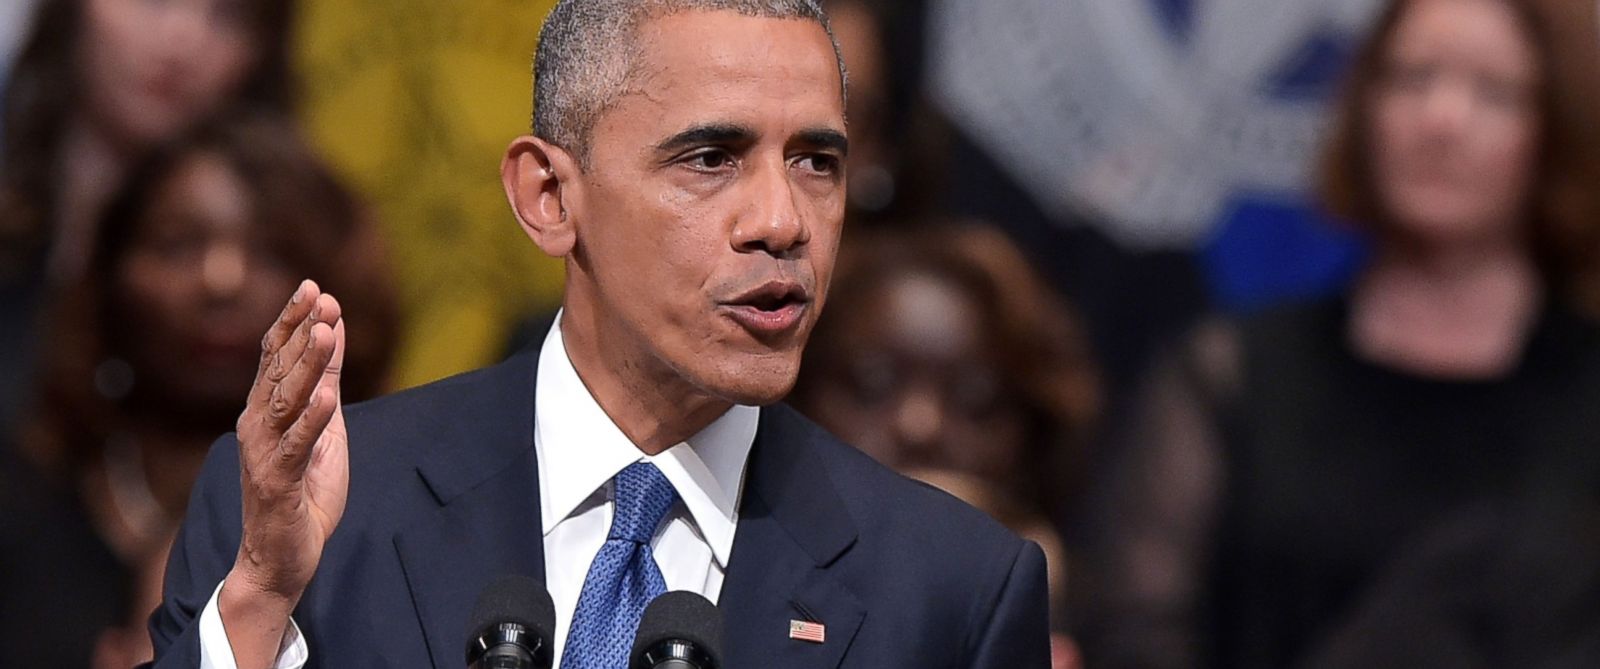 President Obama Pens Letter to Police: ‘We Have Your Backs’